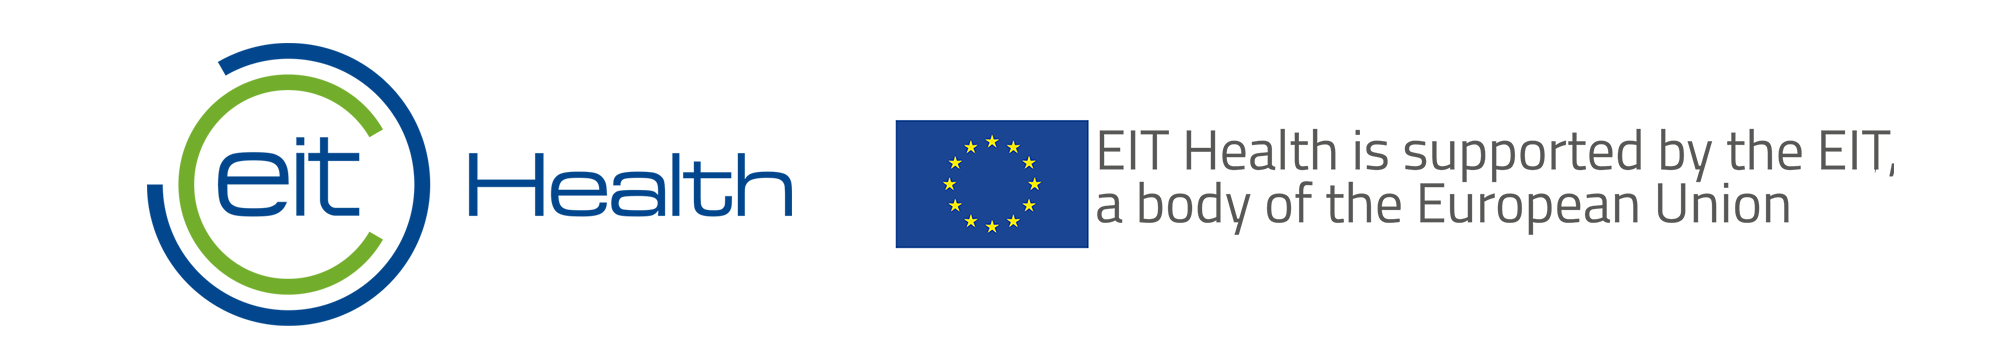 logo EITHealth i bandera de la Unió Europea